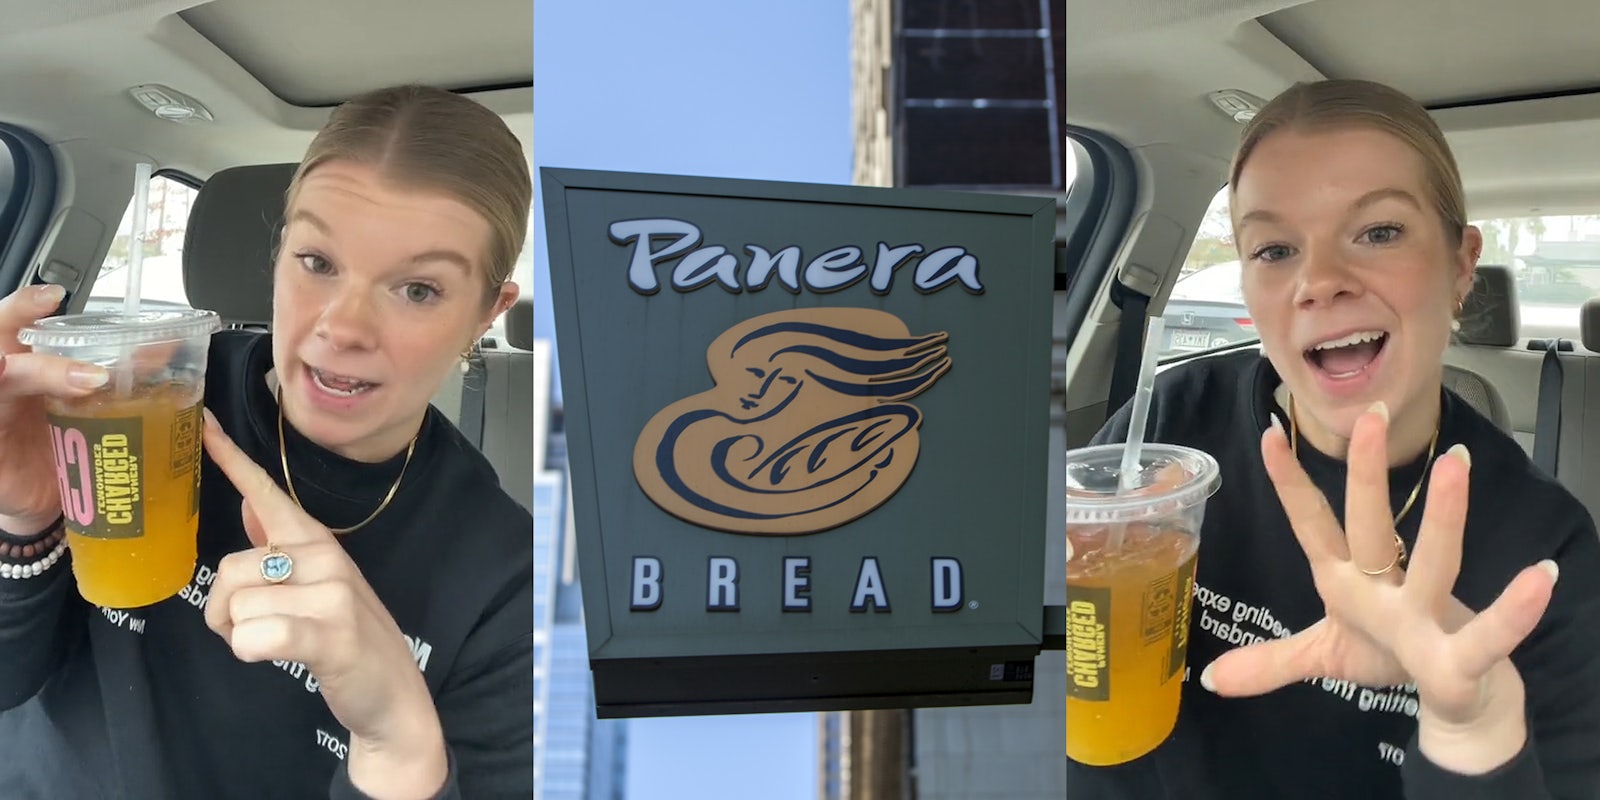 Panera Bread warns customers about charged lemonade